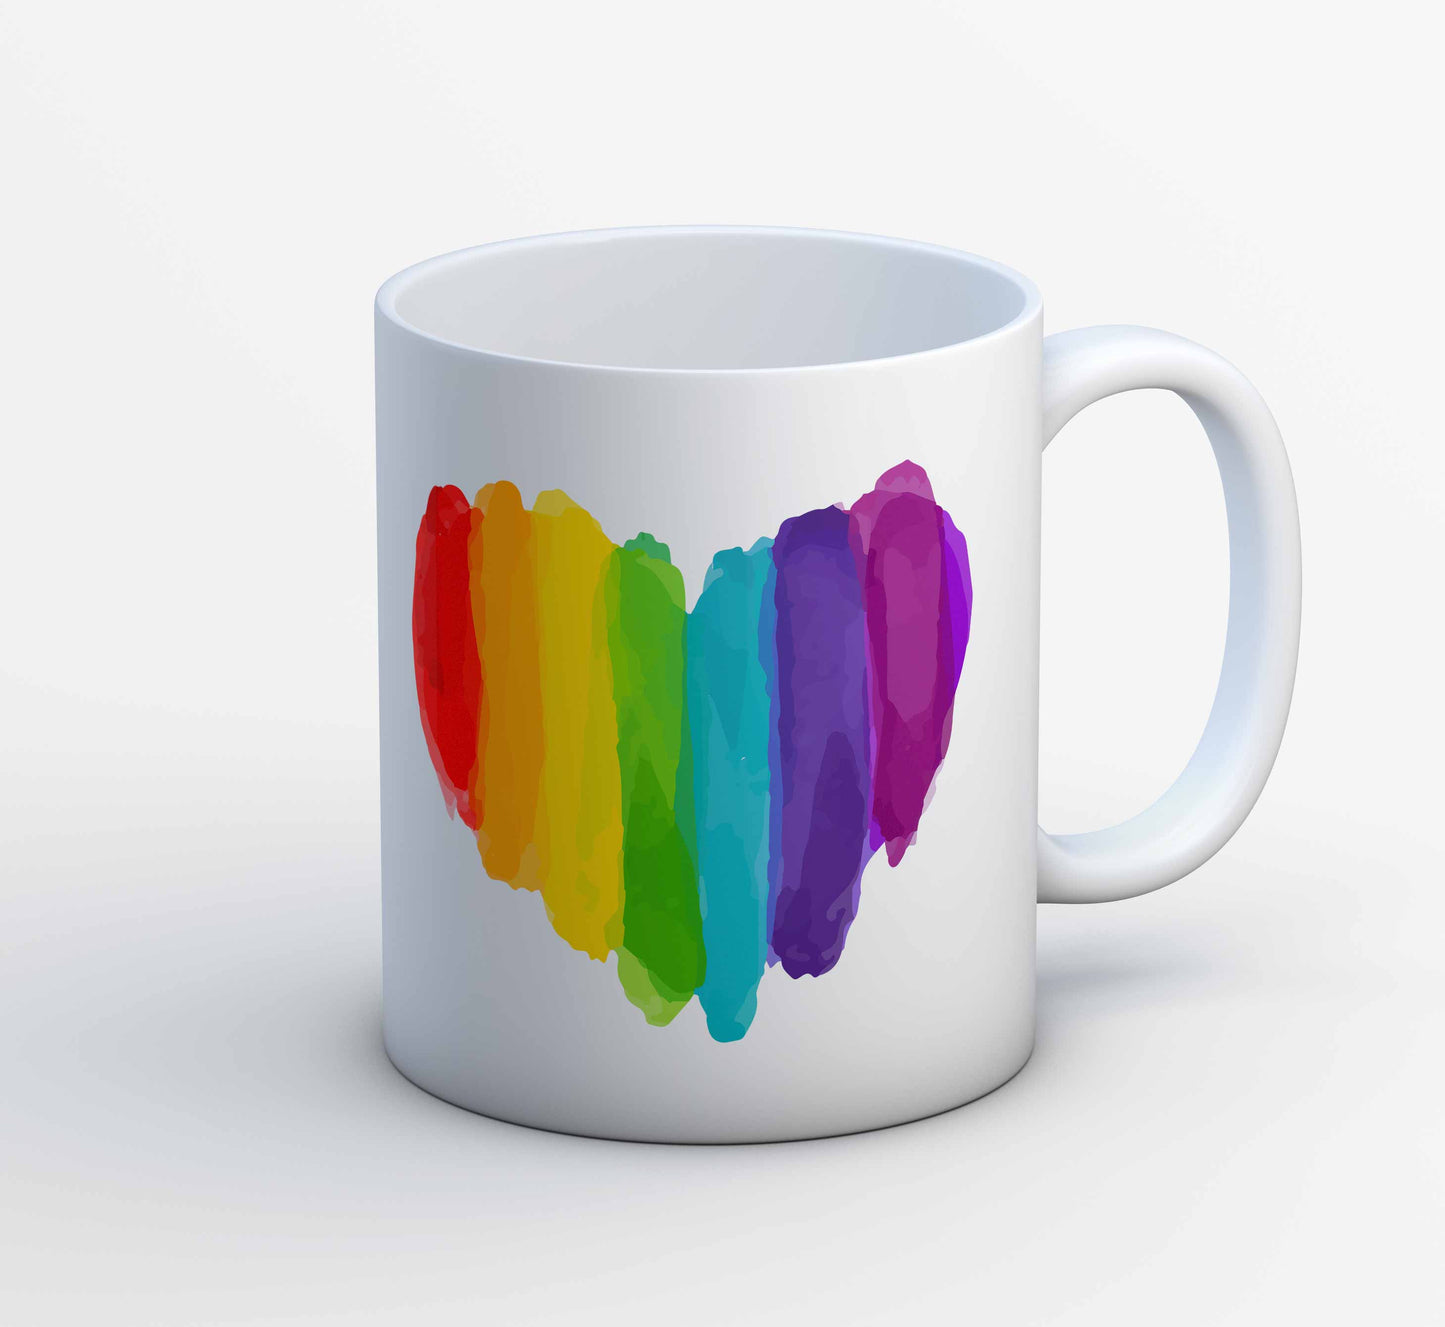 pride rainbow heart mug coffee ceramic printed graphic stylish buy online india the banyan tee tbt men women girls boys unisex  - lgbtqia+